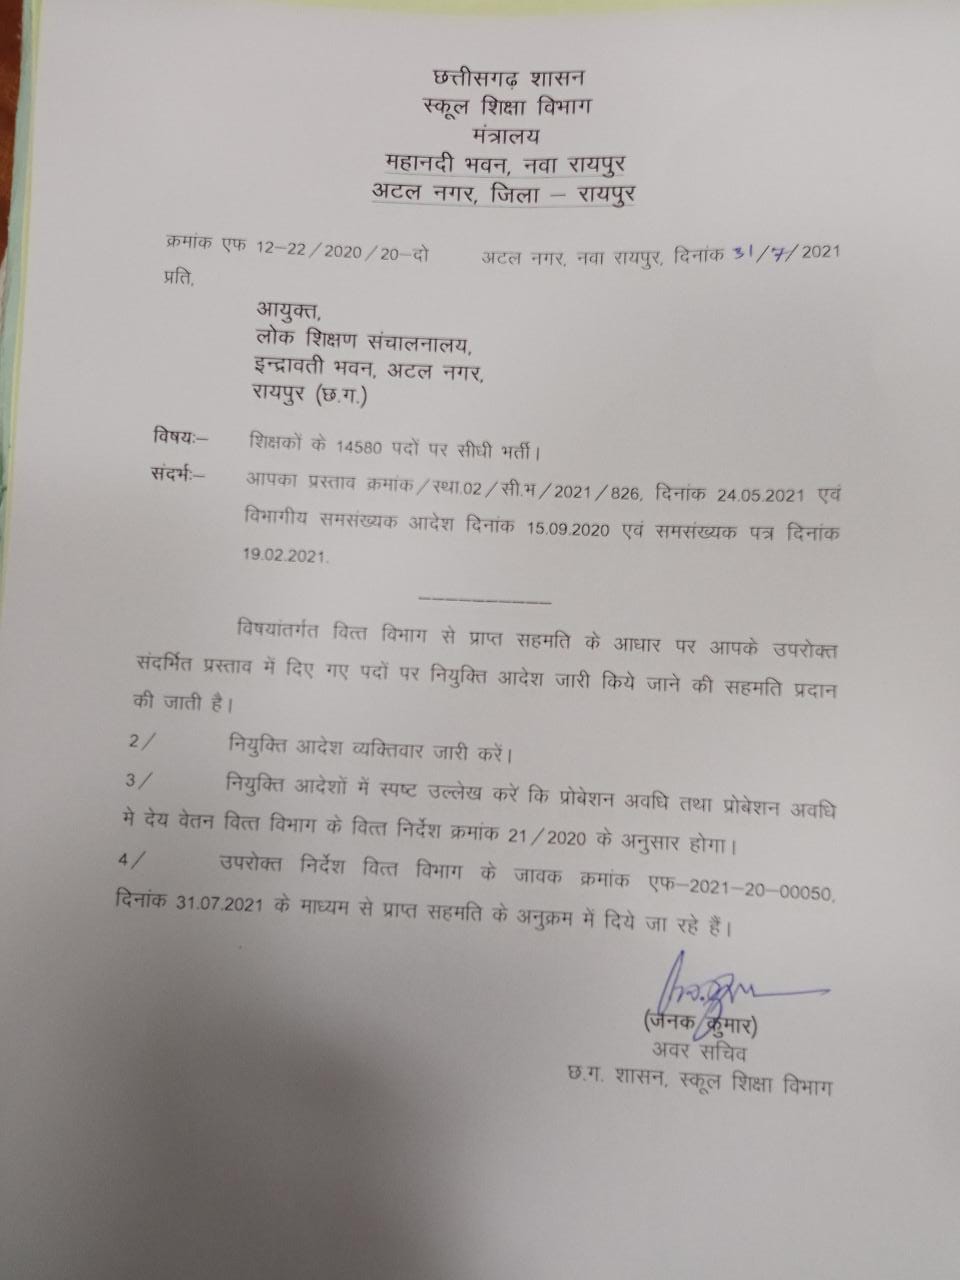 Orders issued for direct recruitment of teachers in Chhattisgarh